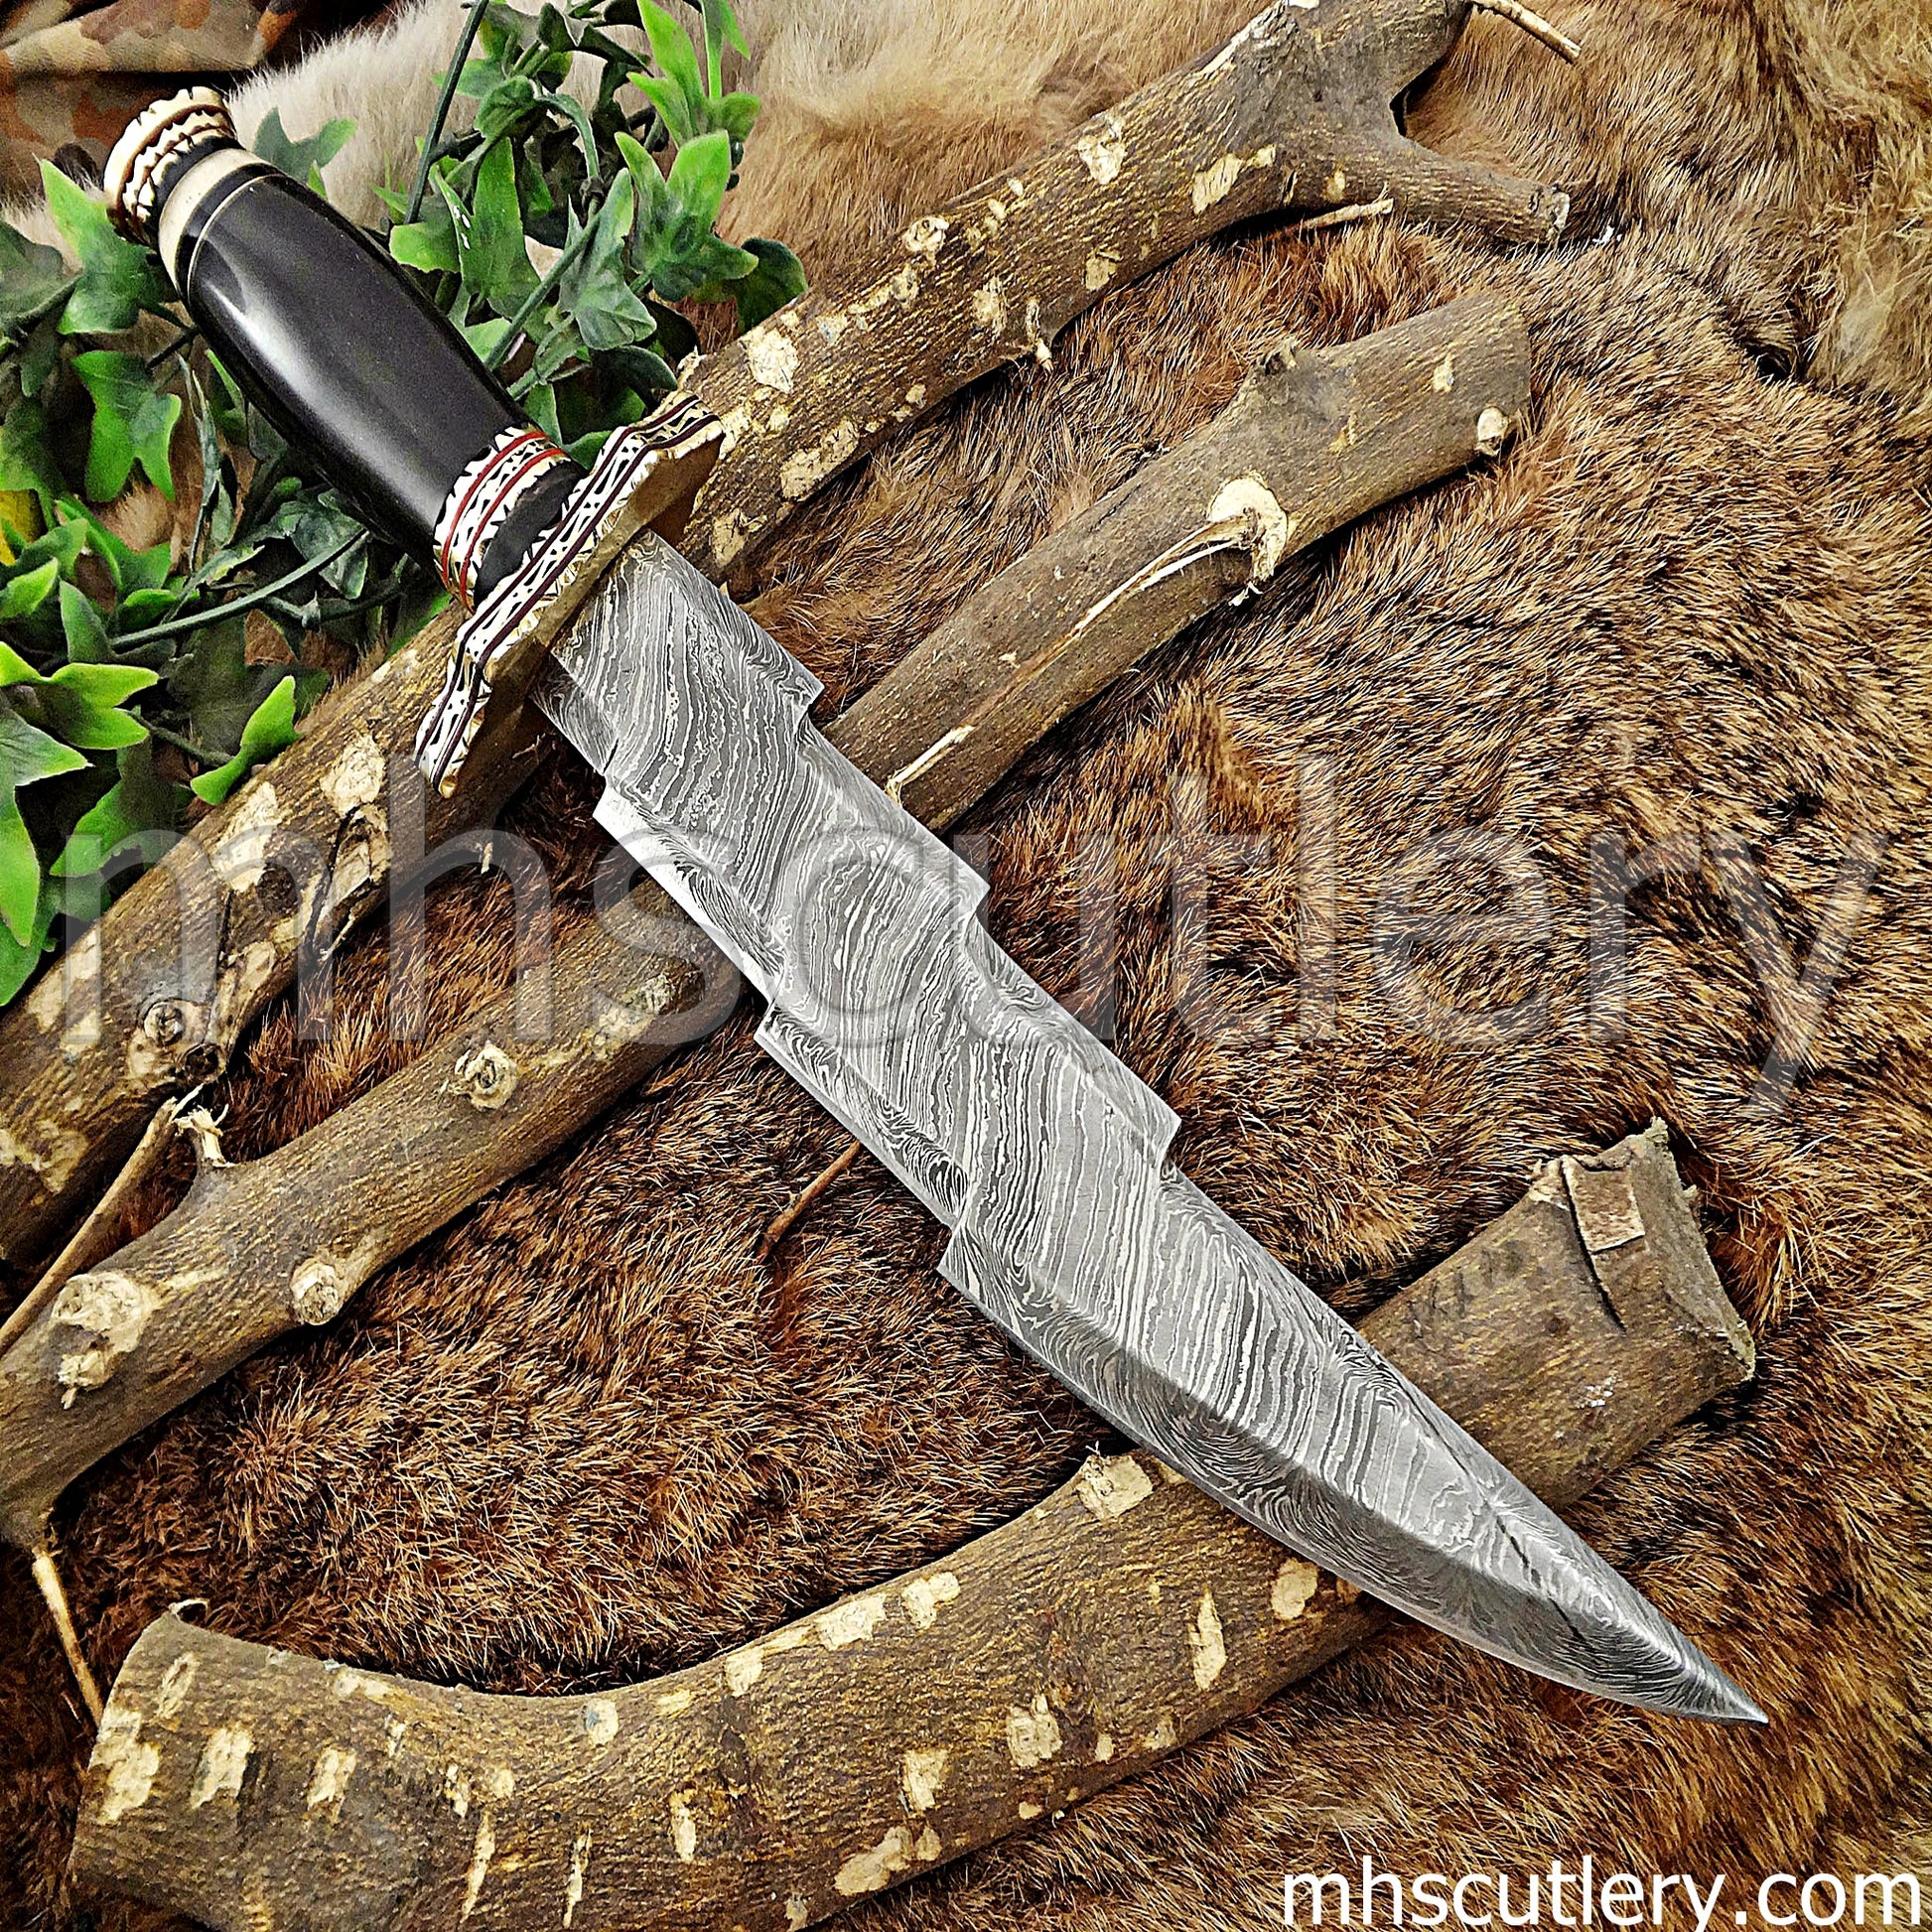 Custom Hand Forged Damascus Steel Zigzag Hunting Knife | mhscutlery